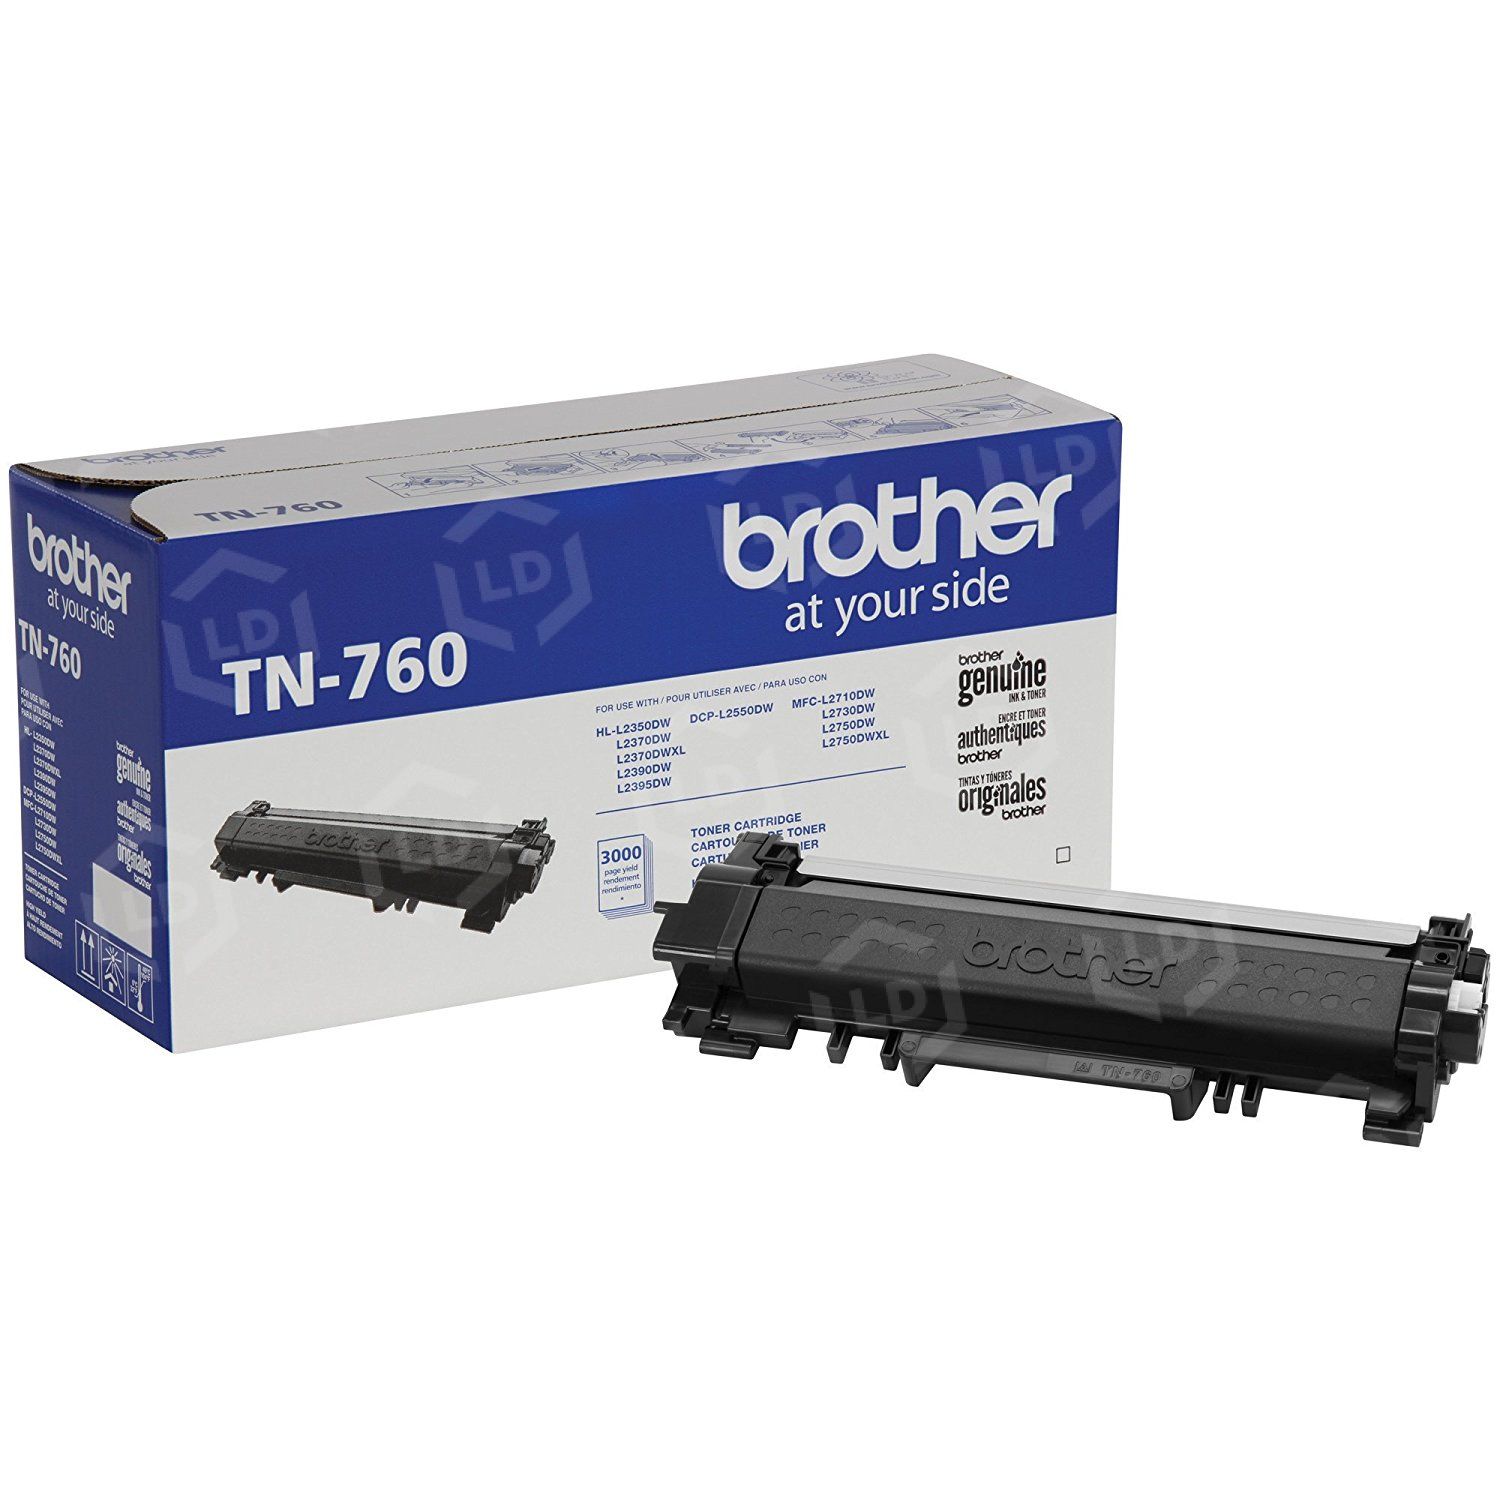 Toner Bank TN730 TN760 Toner Cartridge Compatible for Brother TN